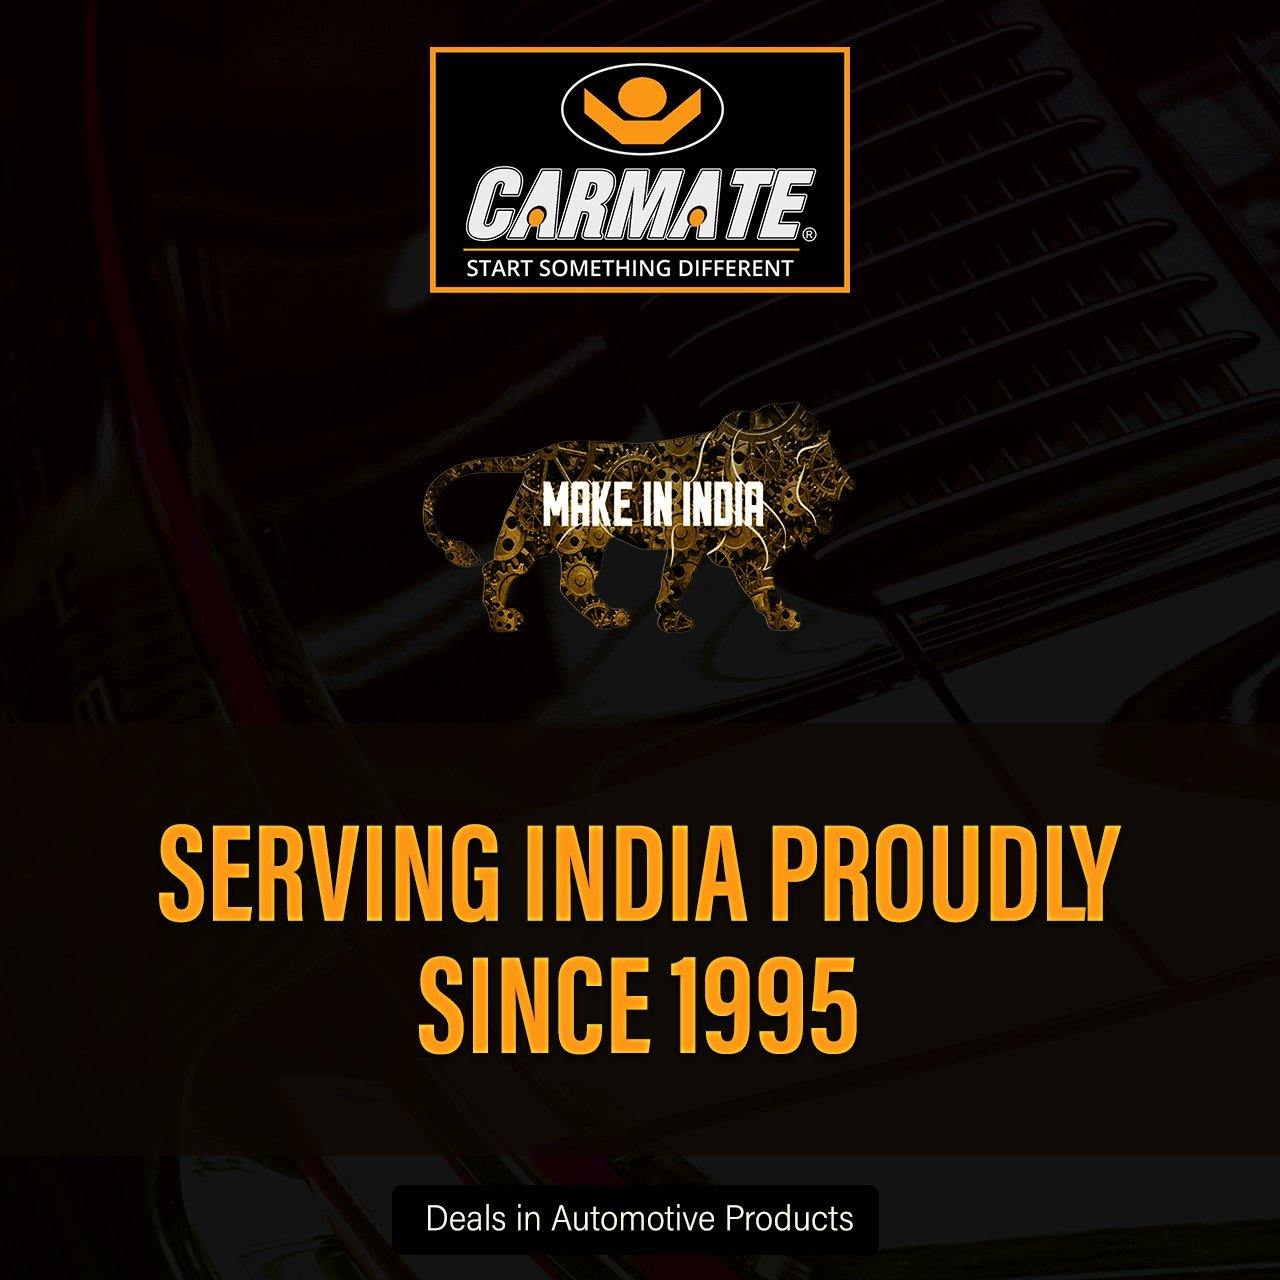 Carmate Car Steering Cover Ring Type Sporty Grip (Black and Tan) For Hyundai - Creta 2020 (Medium) - CARMATE®